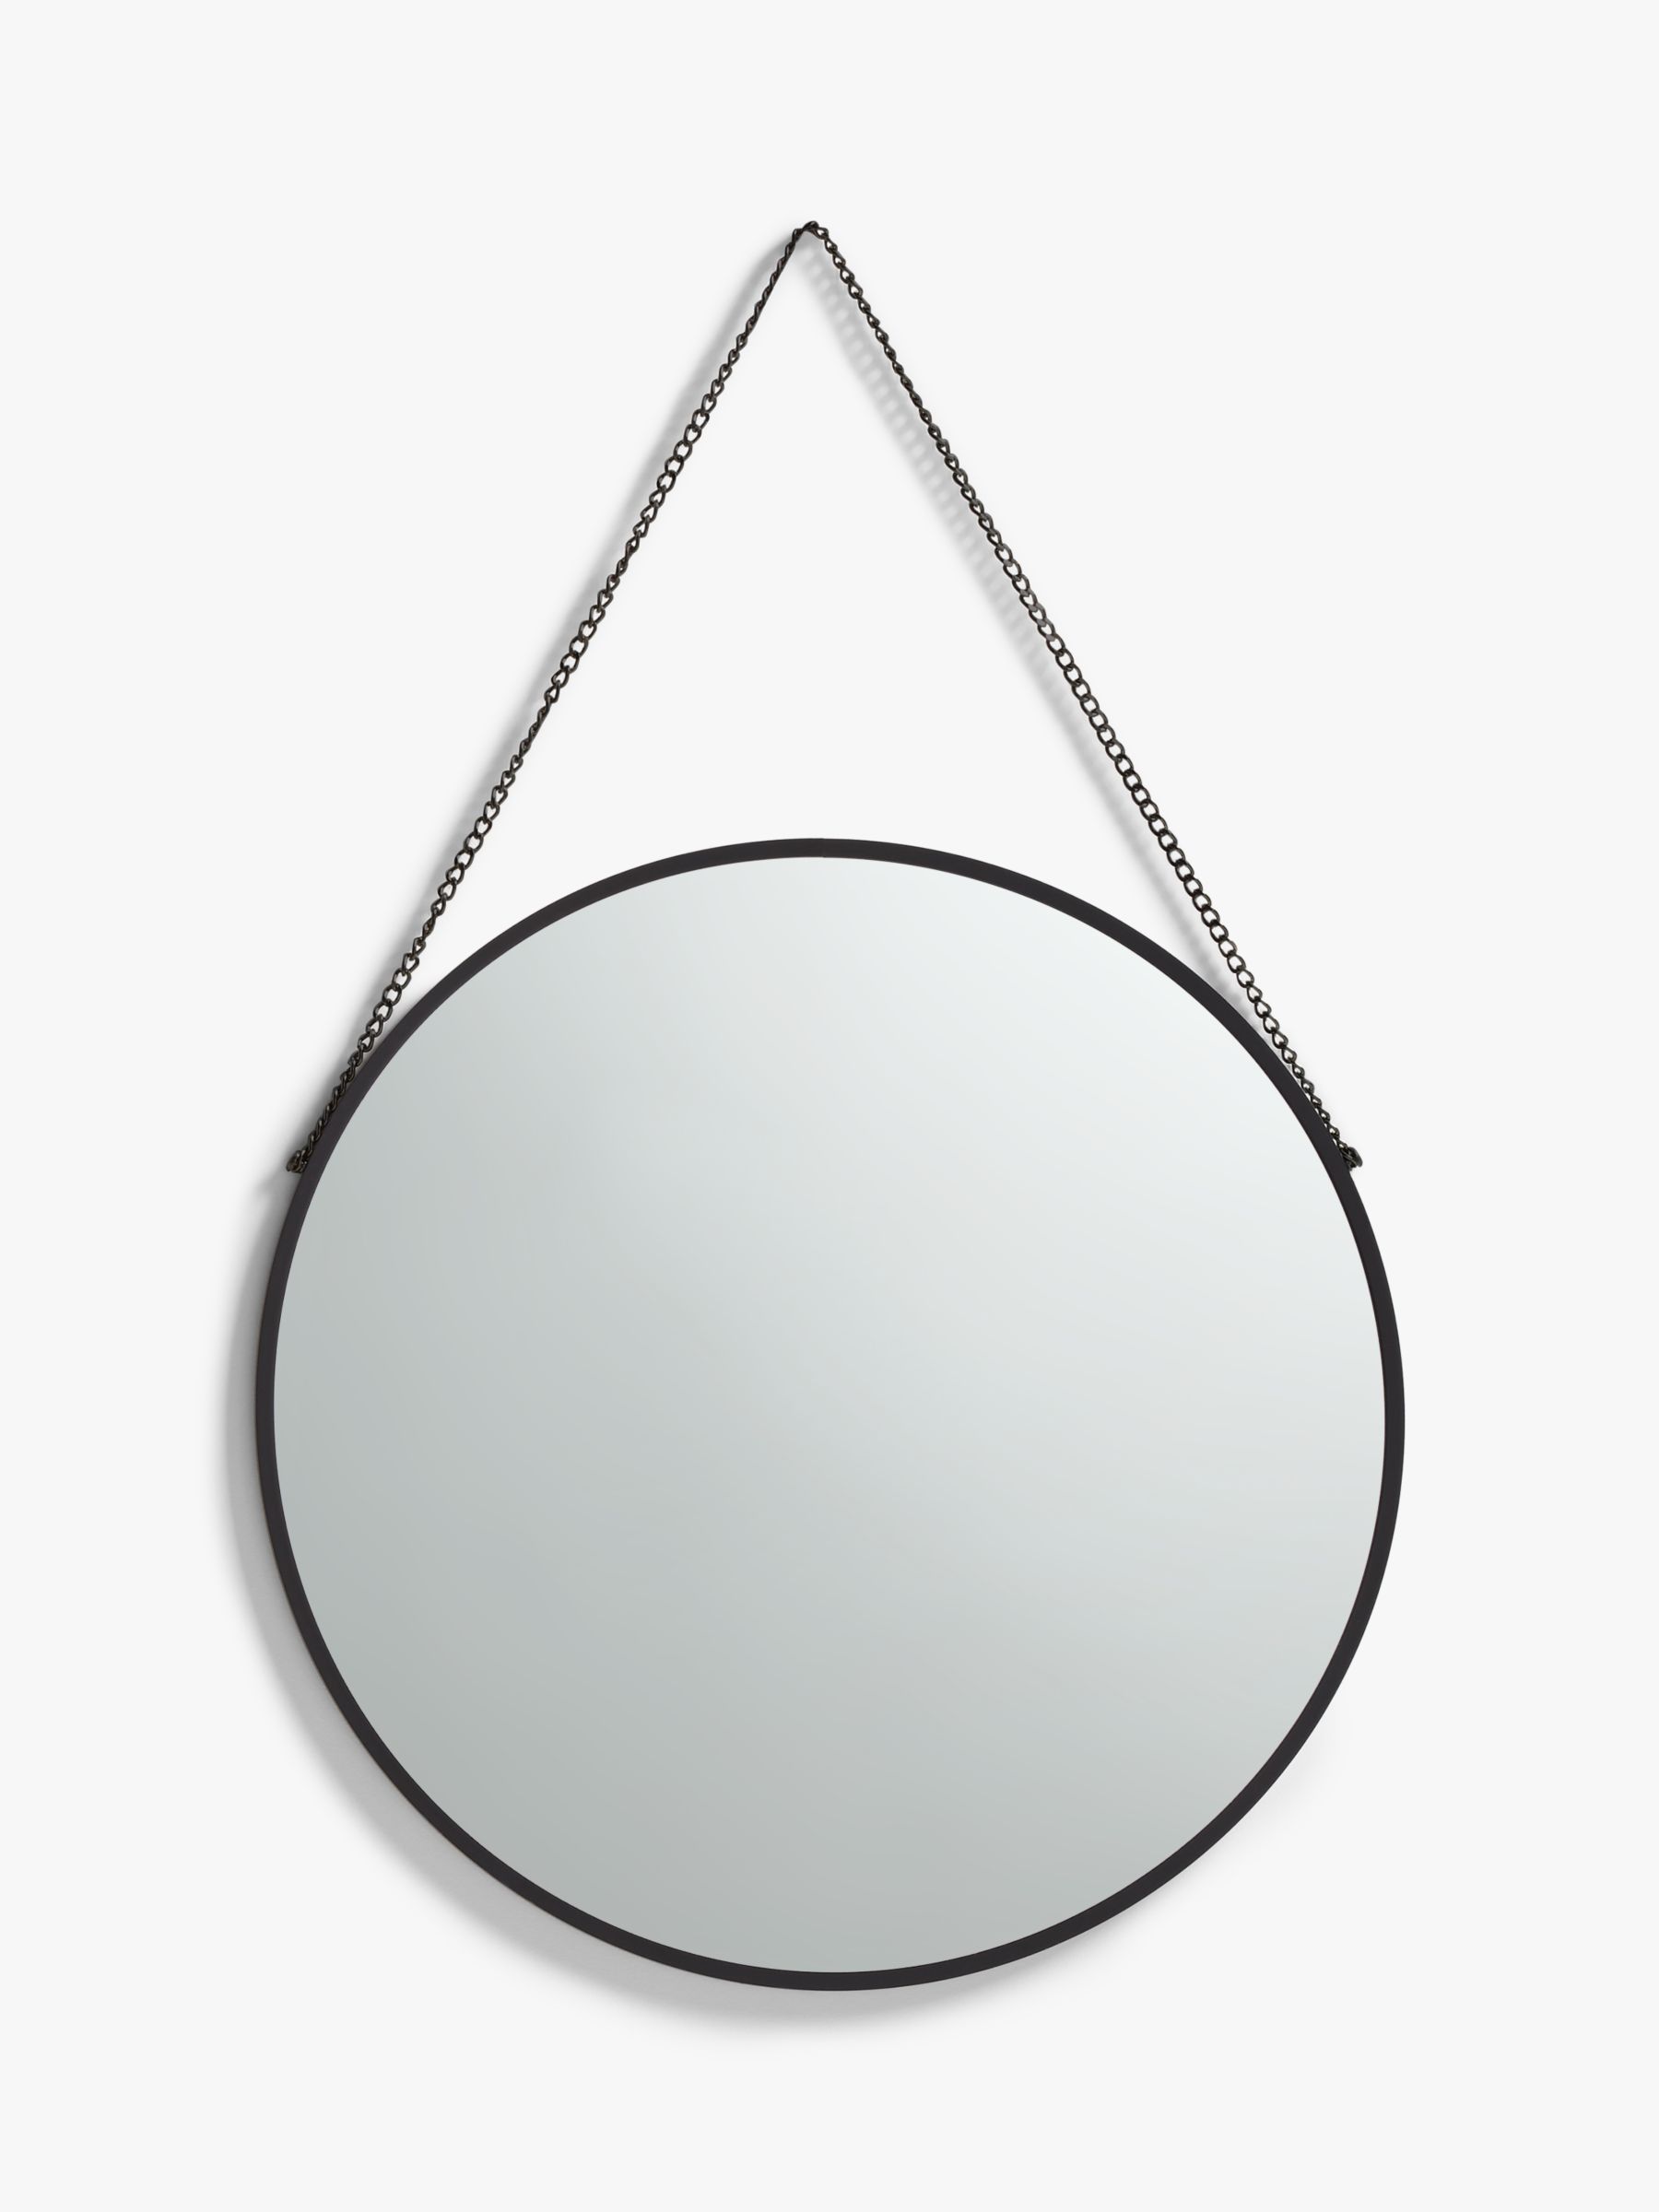 Anyday John Lewis Partners Thin, Black Framed Round Mirror 50cm